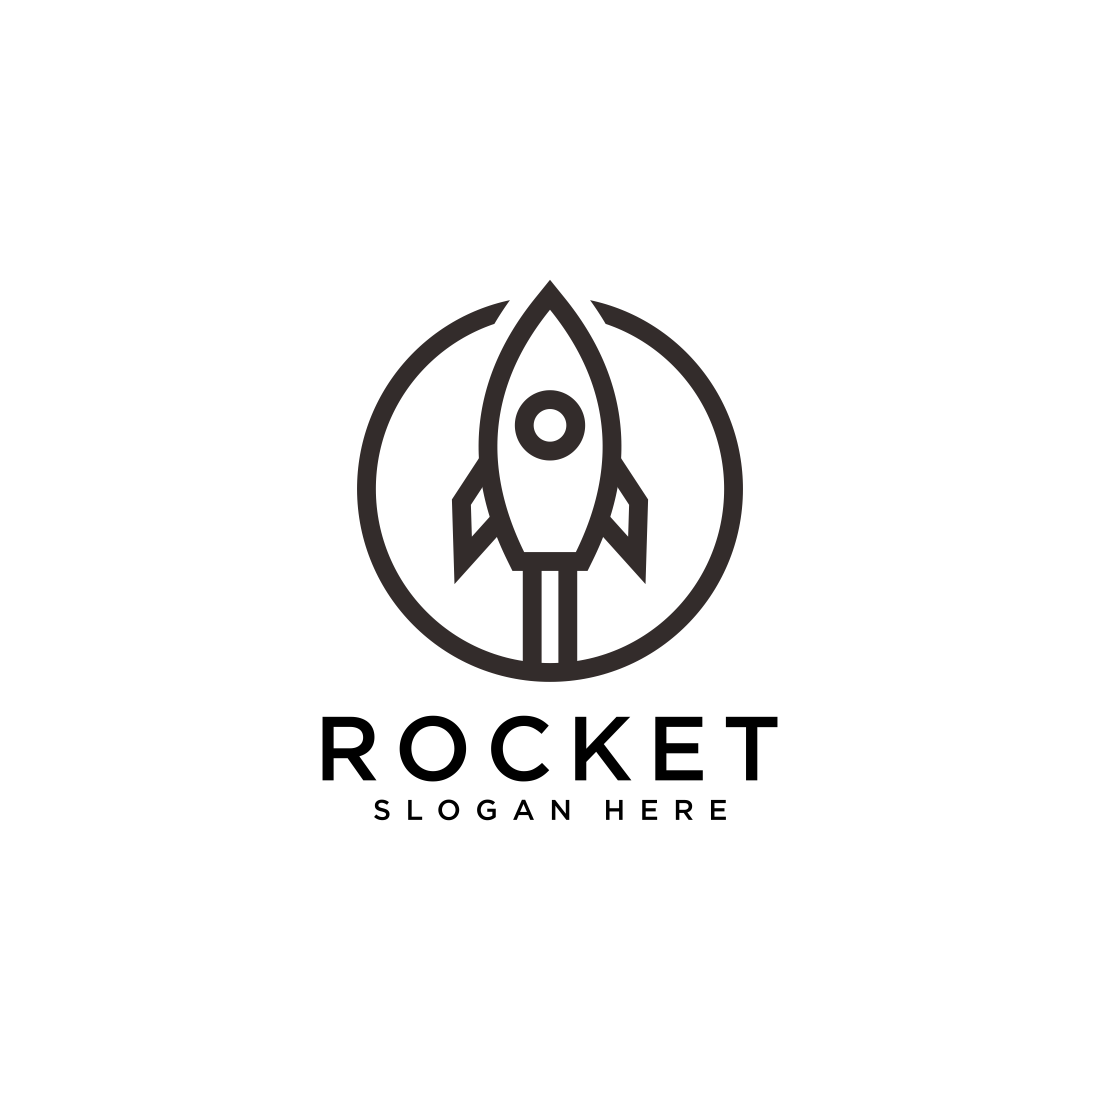 rocket launch logo vector design preview image.